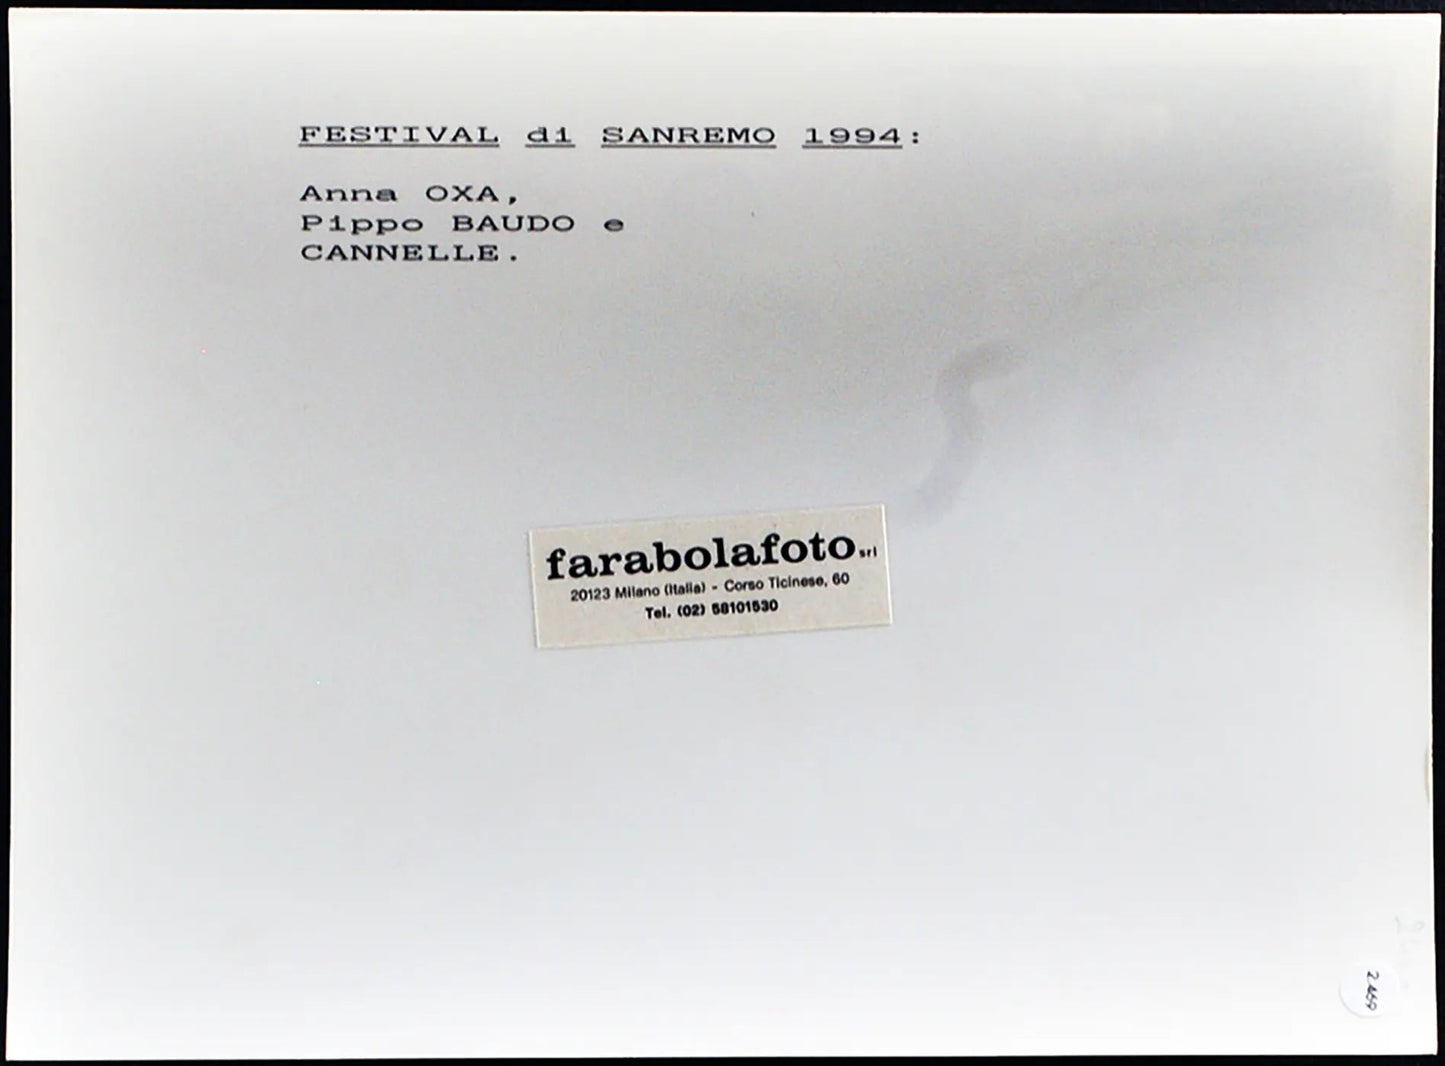 Sanremo 1994 Anna Oxa, Baudo e Cannelle Ft 2469 - Stampa 24x18 cm - Farabola Stampa ai sali d'argento